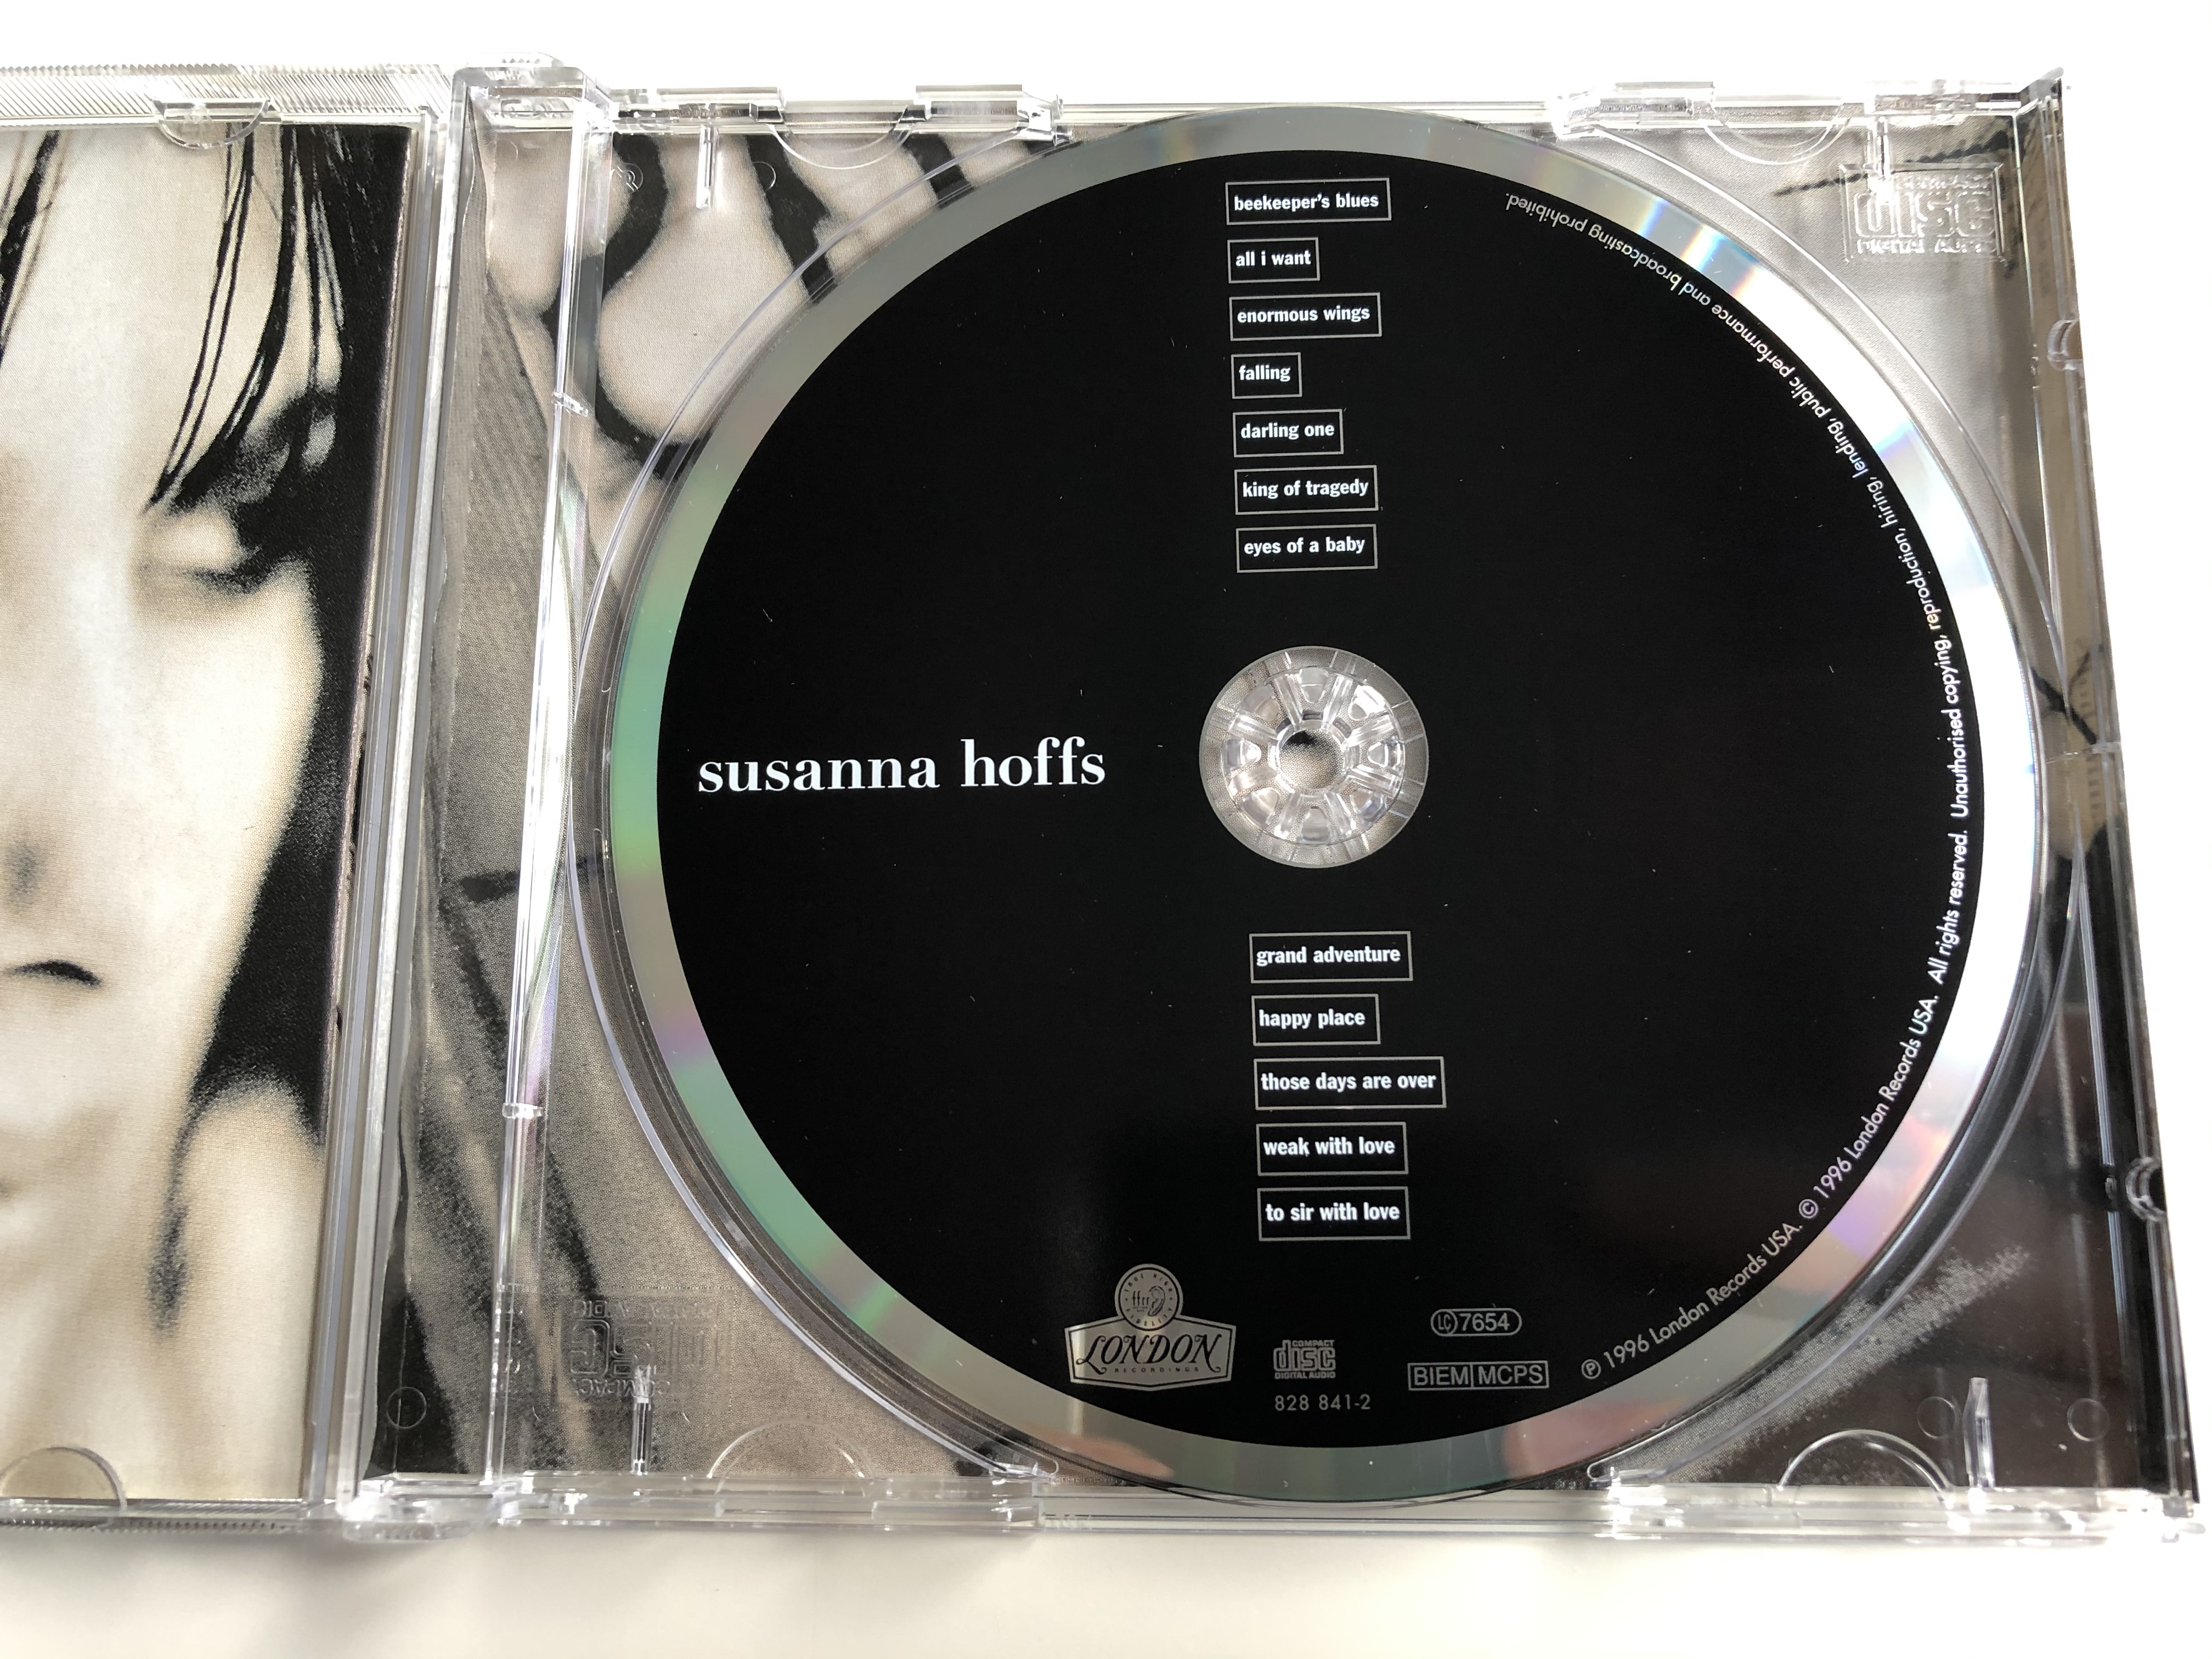 susanna-hoffs-london-records-audio-cd-1996-828-841-2-5-.jpg